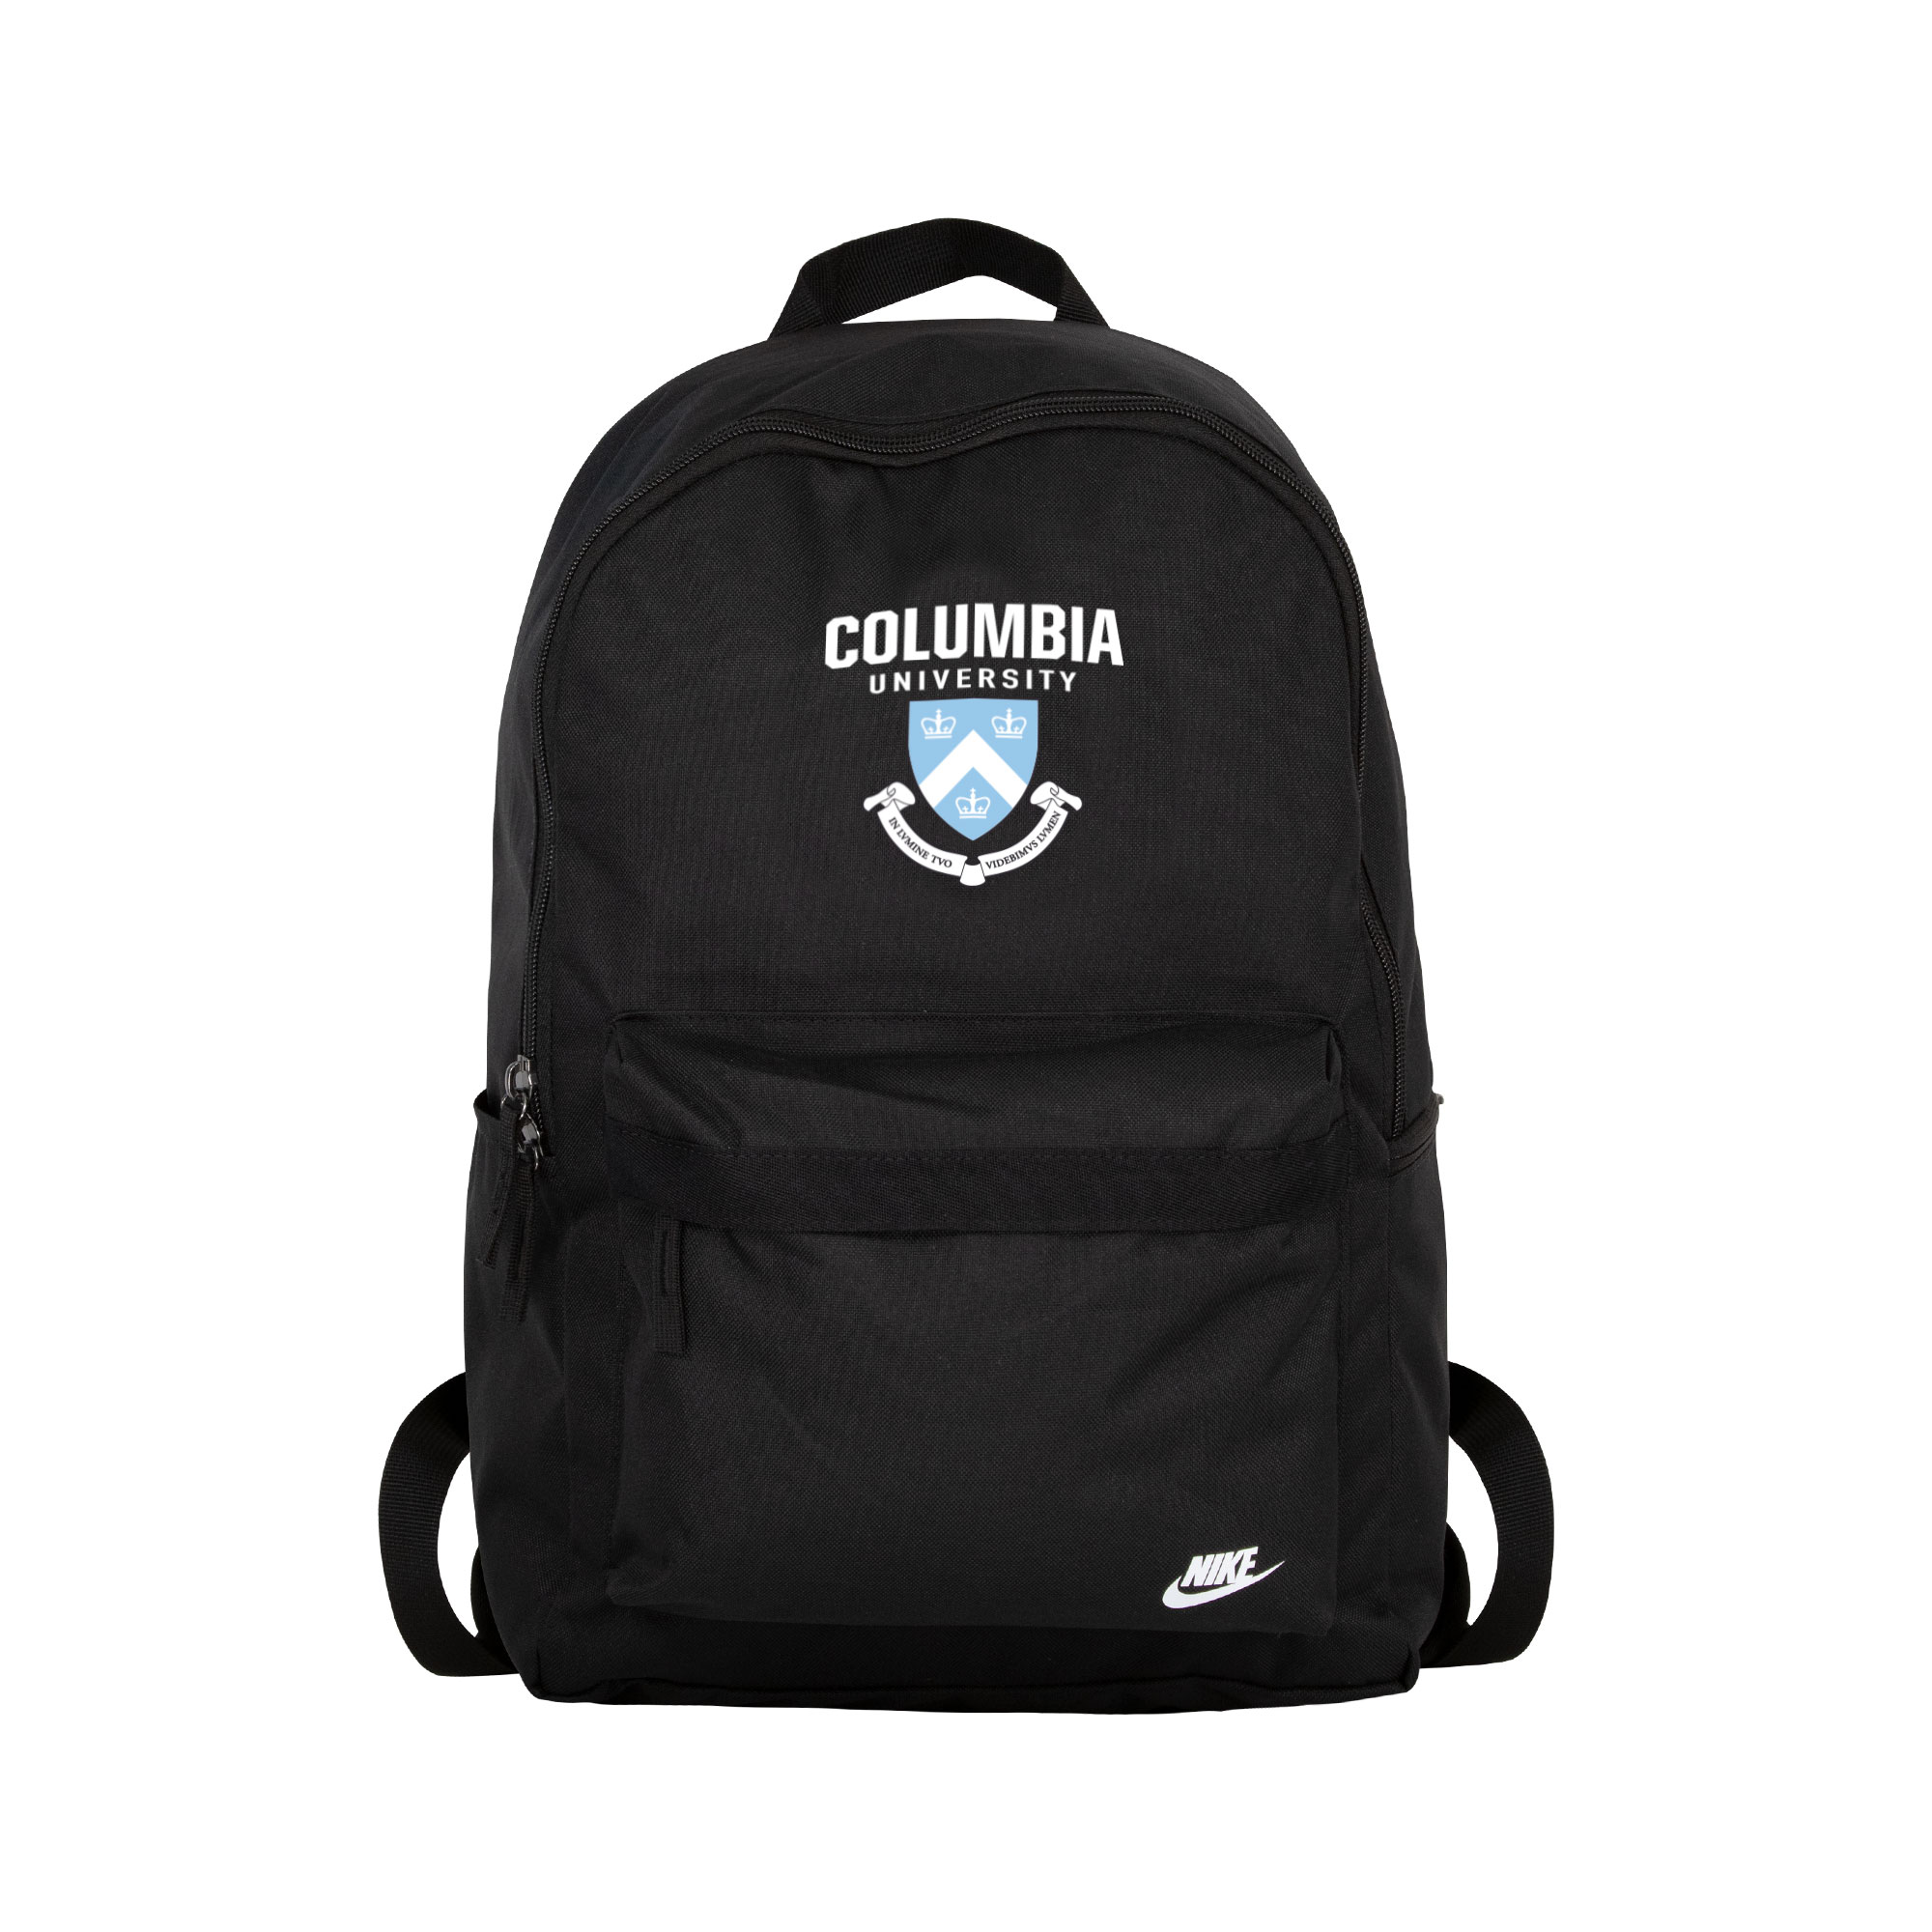 Columbia University Heritage Backpack blk